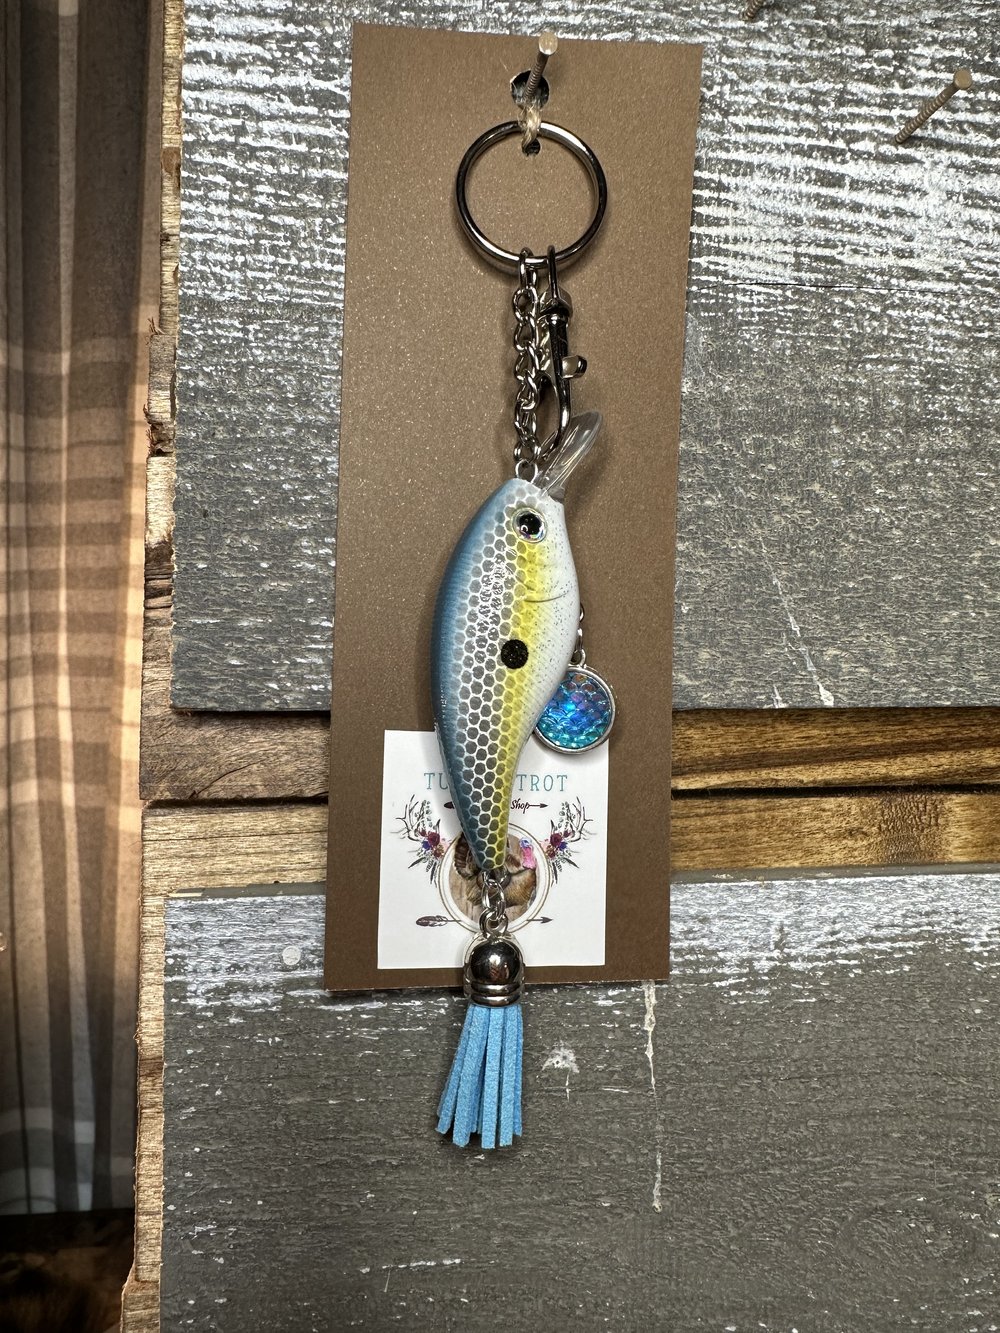 Fishing Lure Keychain #1 — Turkey Trot Farm & Shop LLC